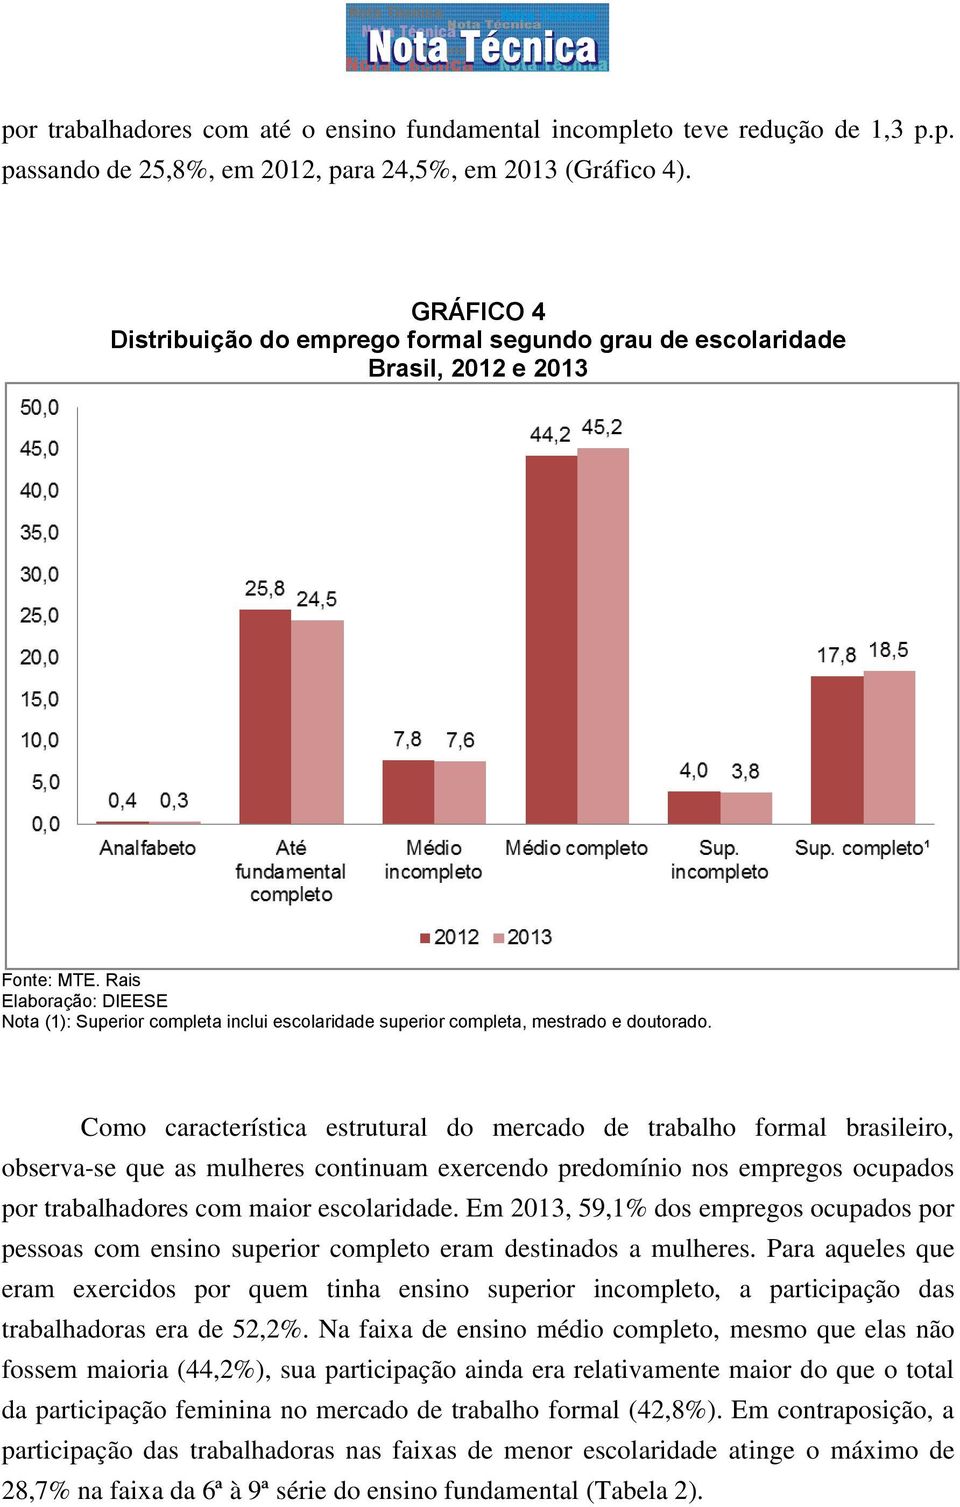 Como característica estrutural do mercado de trabalho formal brasileiro, observa-se que as mulheres continuam exercendo predomínio nos empregos ocupados por trabalhadores com maior escolaridade.